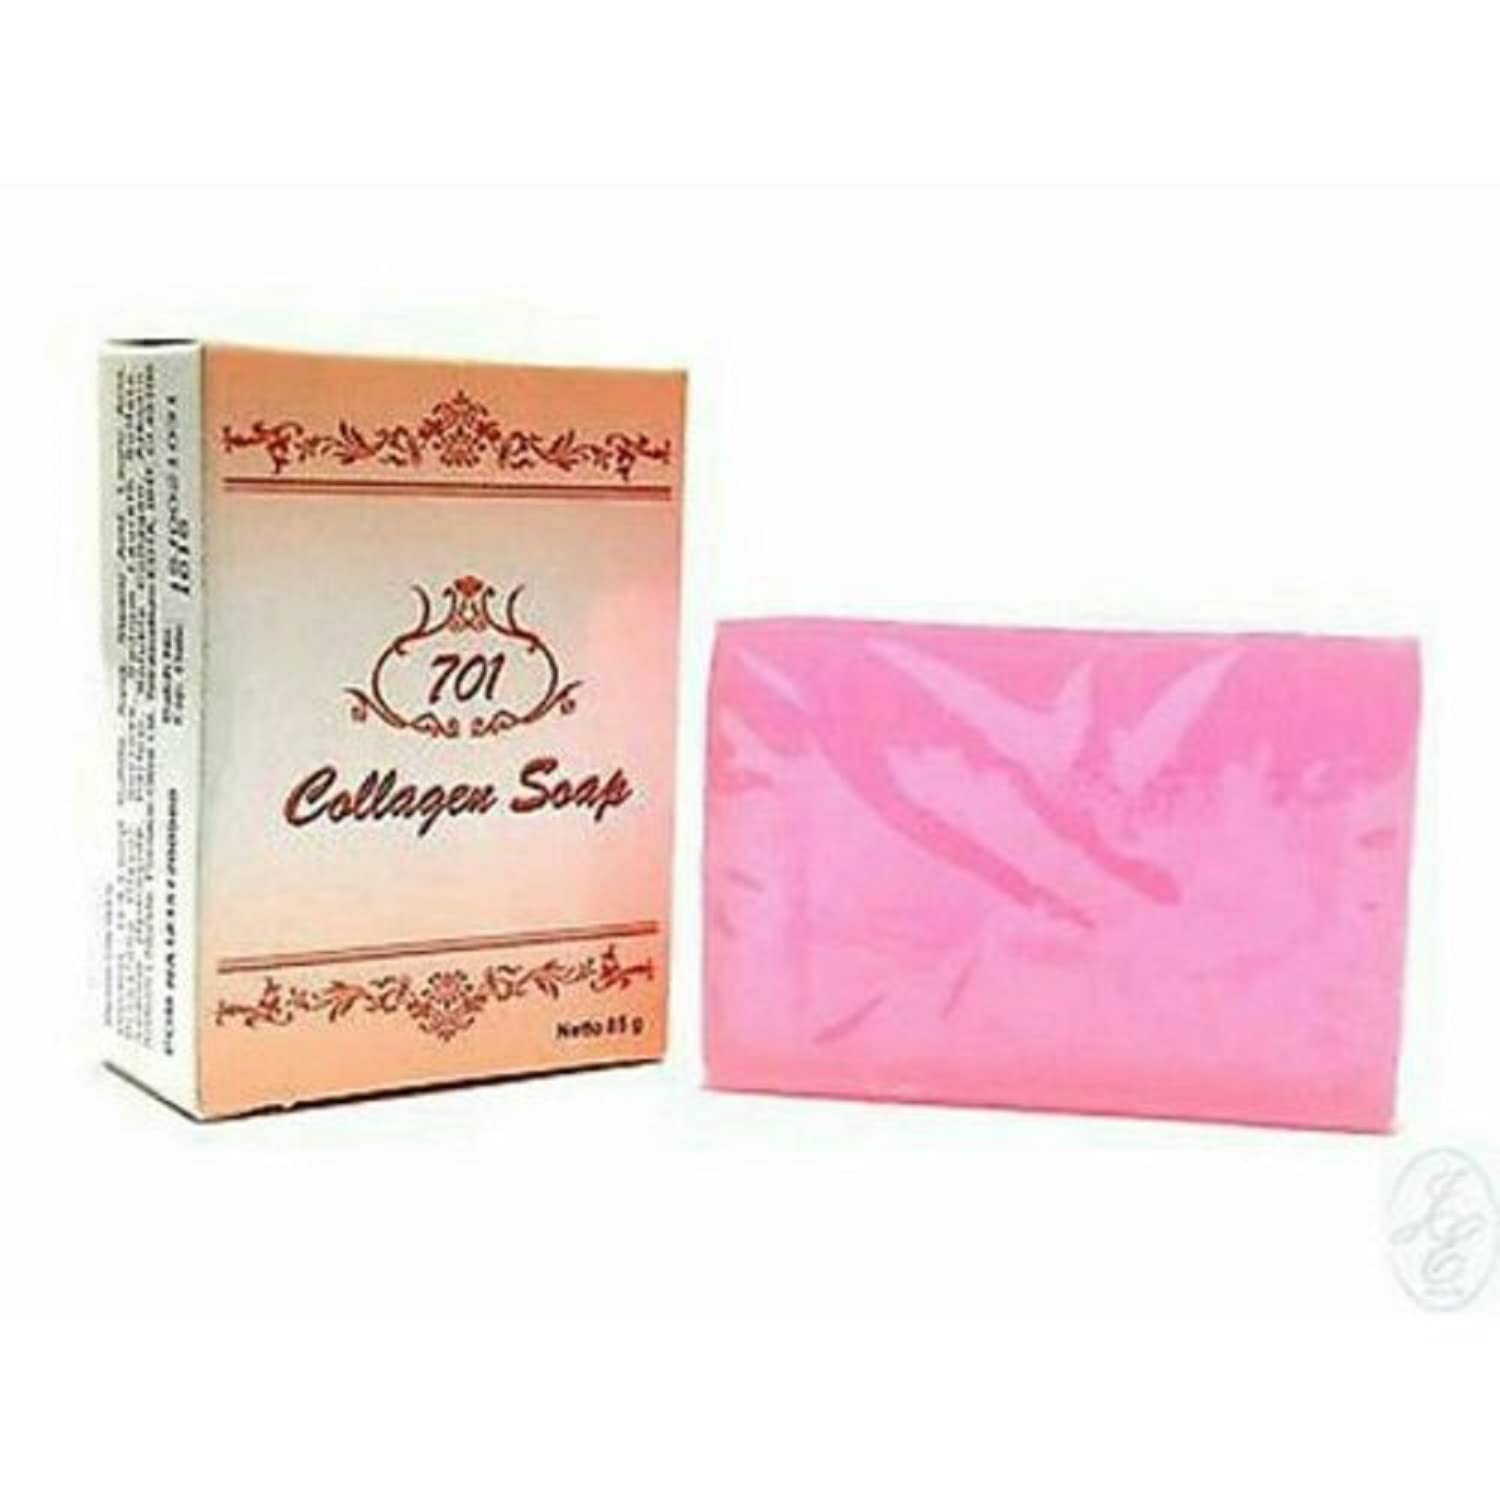 701 Collagen Soap